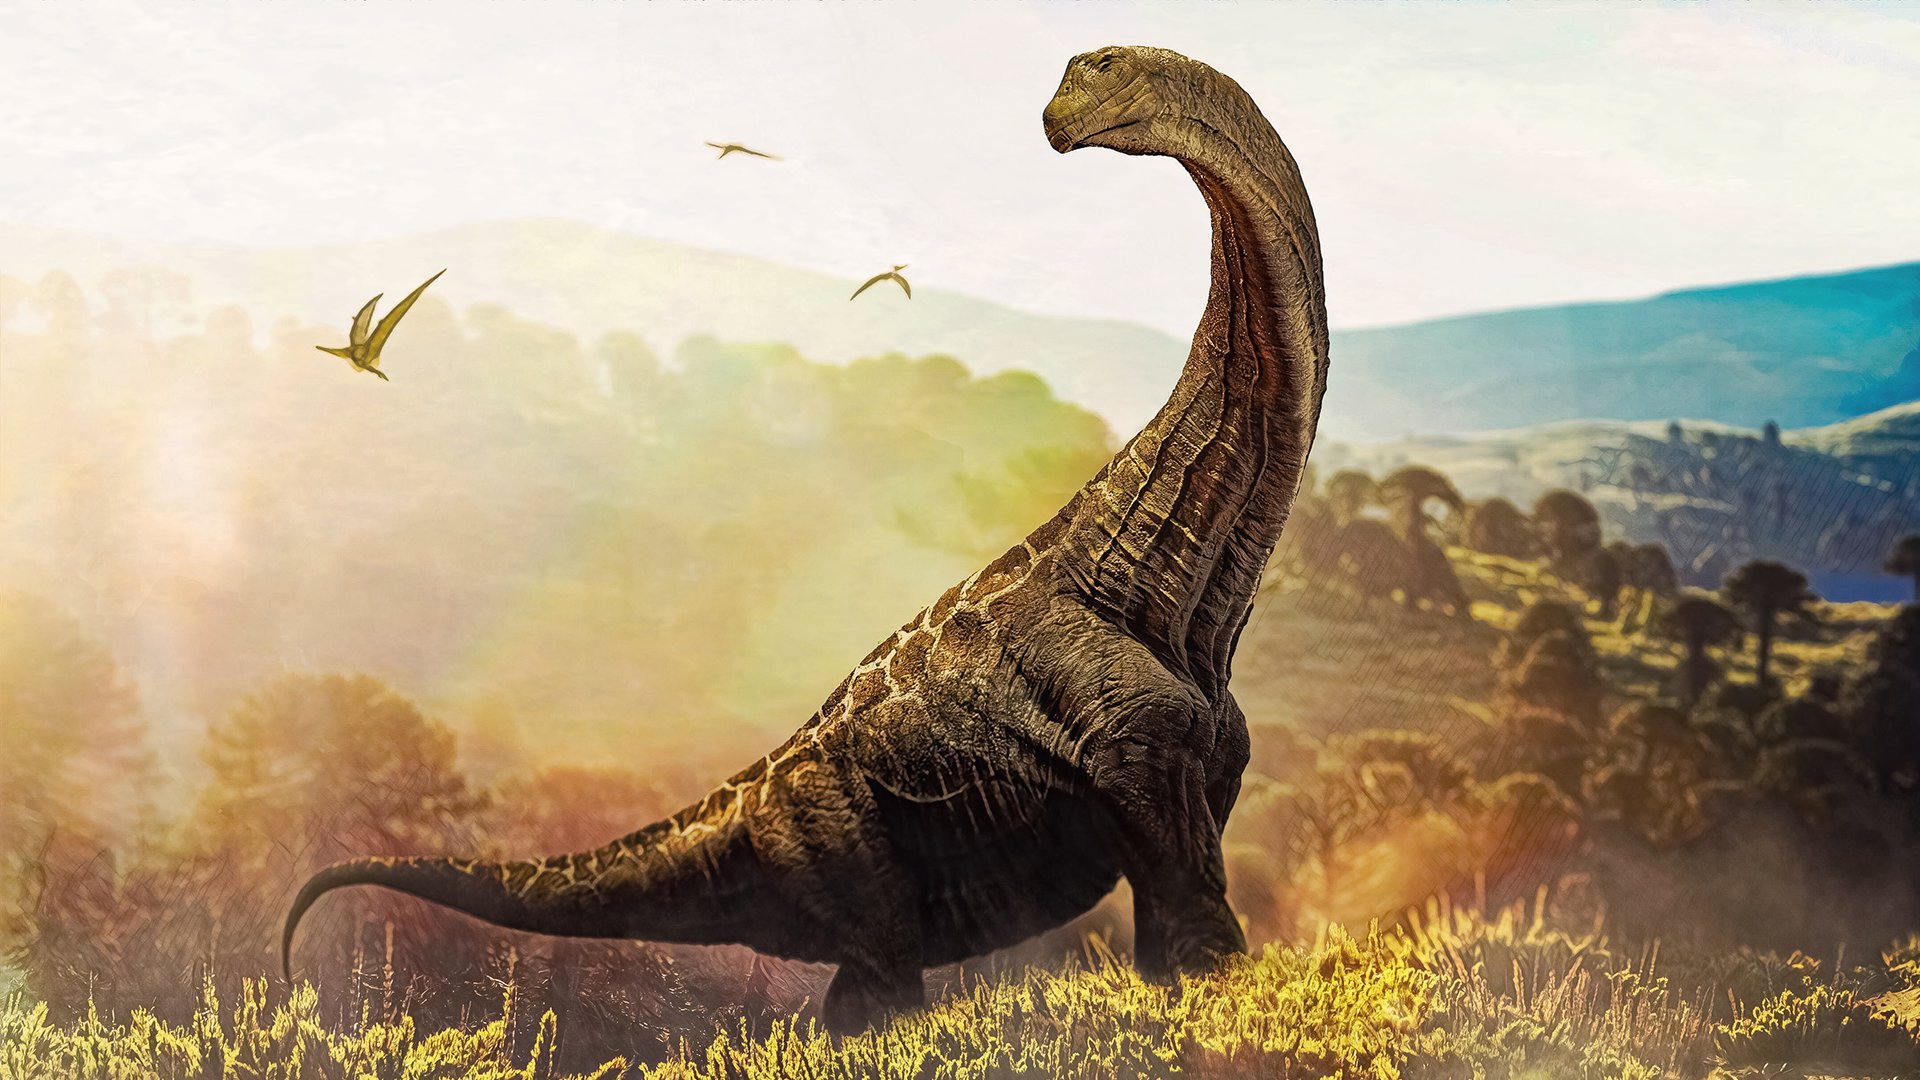 Age of Dinosaurs - Atlasaurus